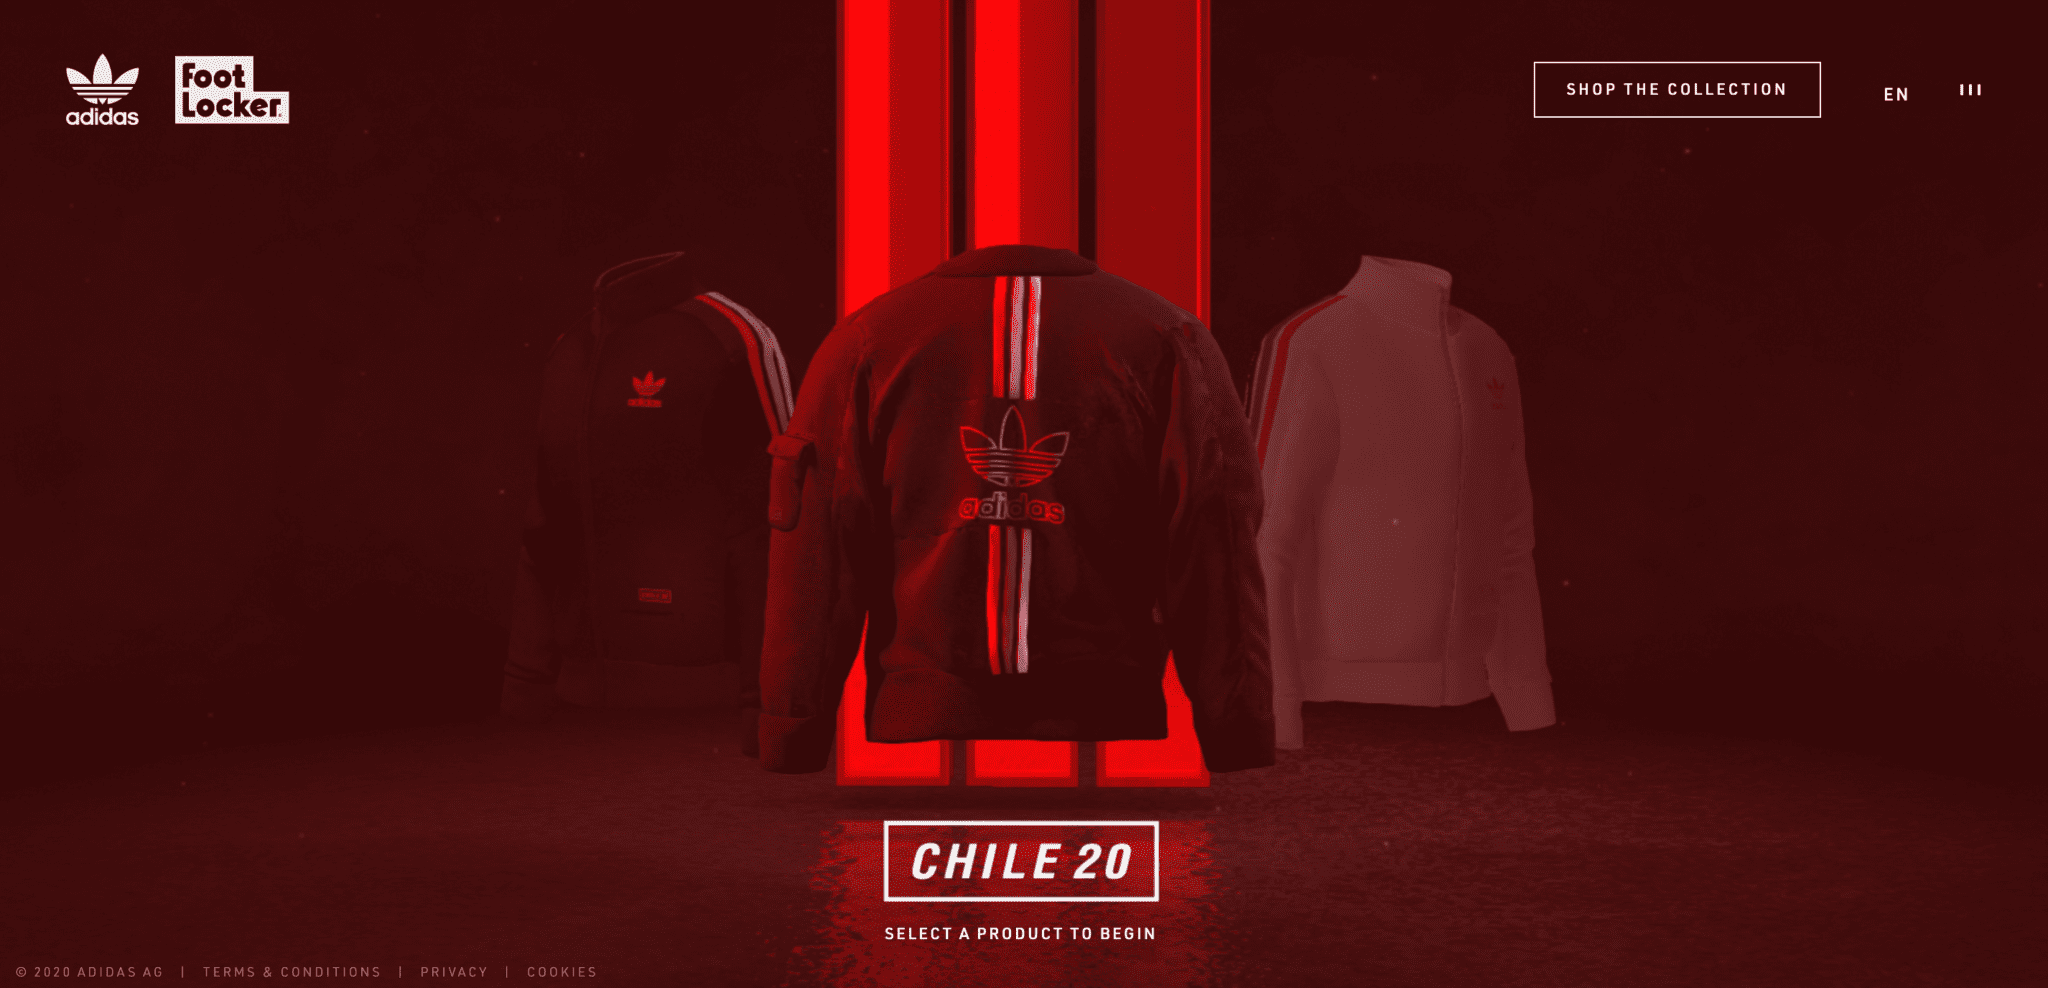 Adidas/Footlocker Chile 20 homepage